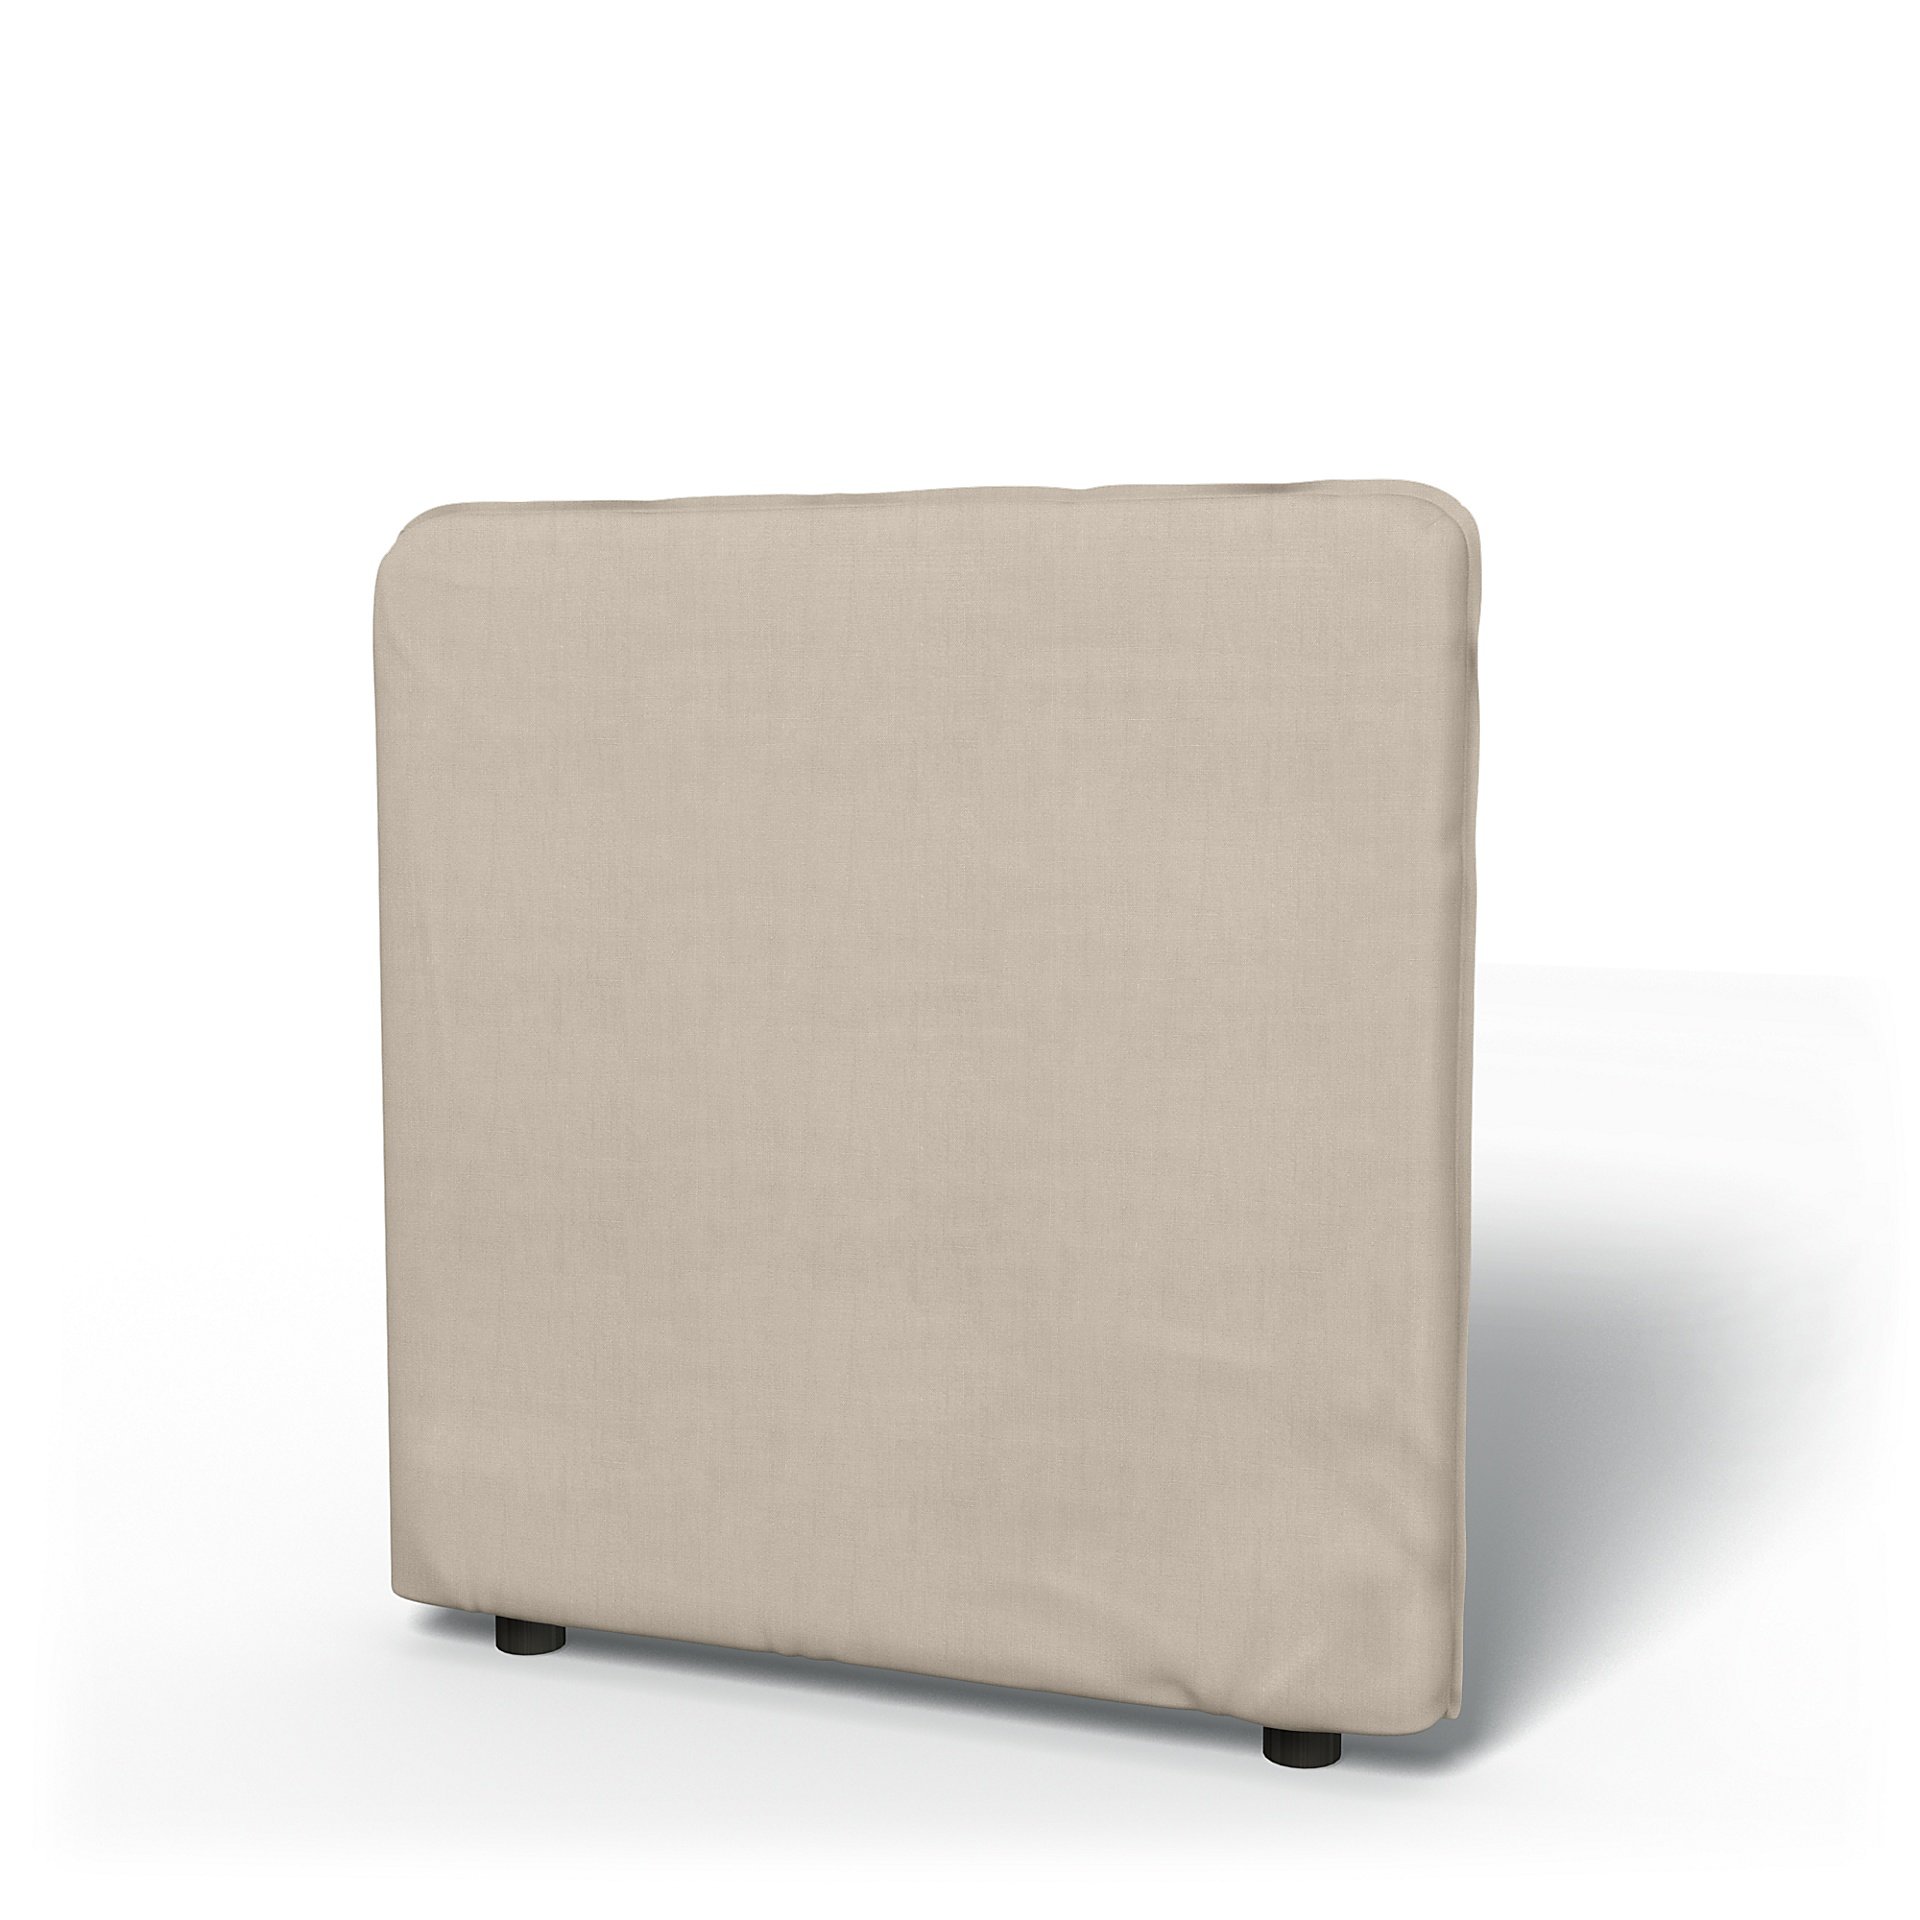 IKEA - Vallentuna Low Backrest Cover 80x80cm 32x32in, Parchment, Linen - Bemz